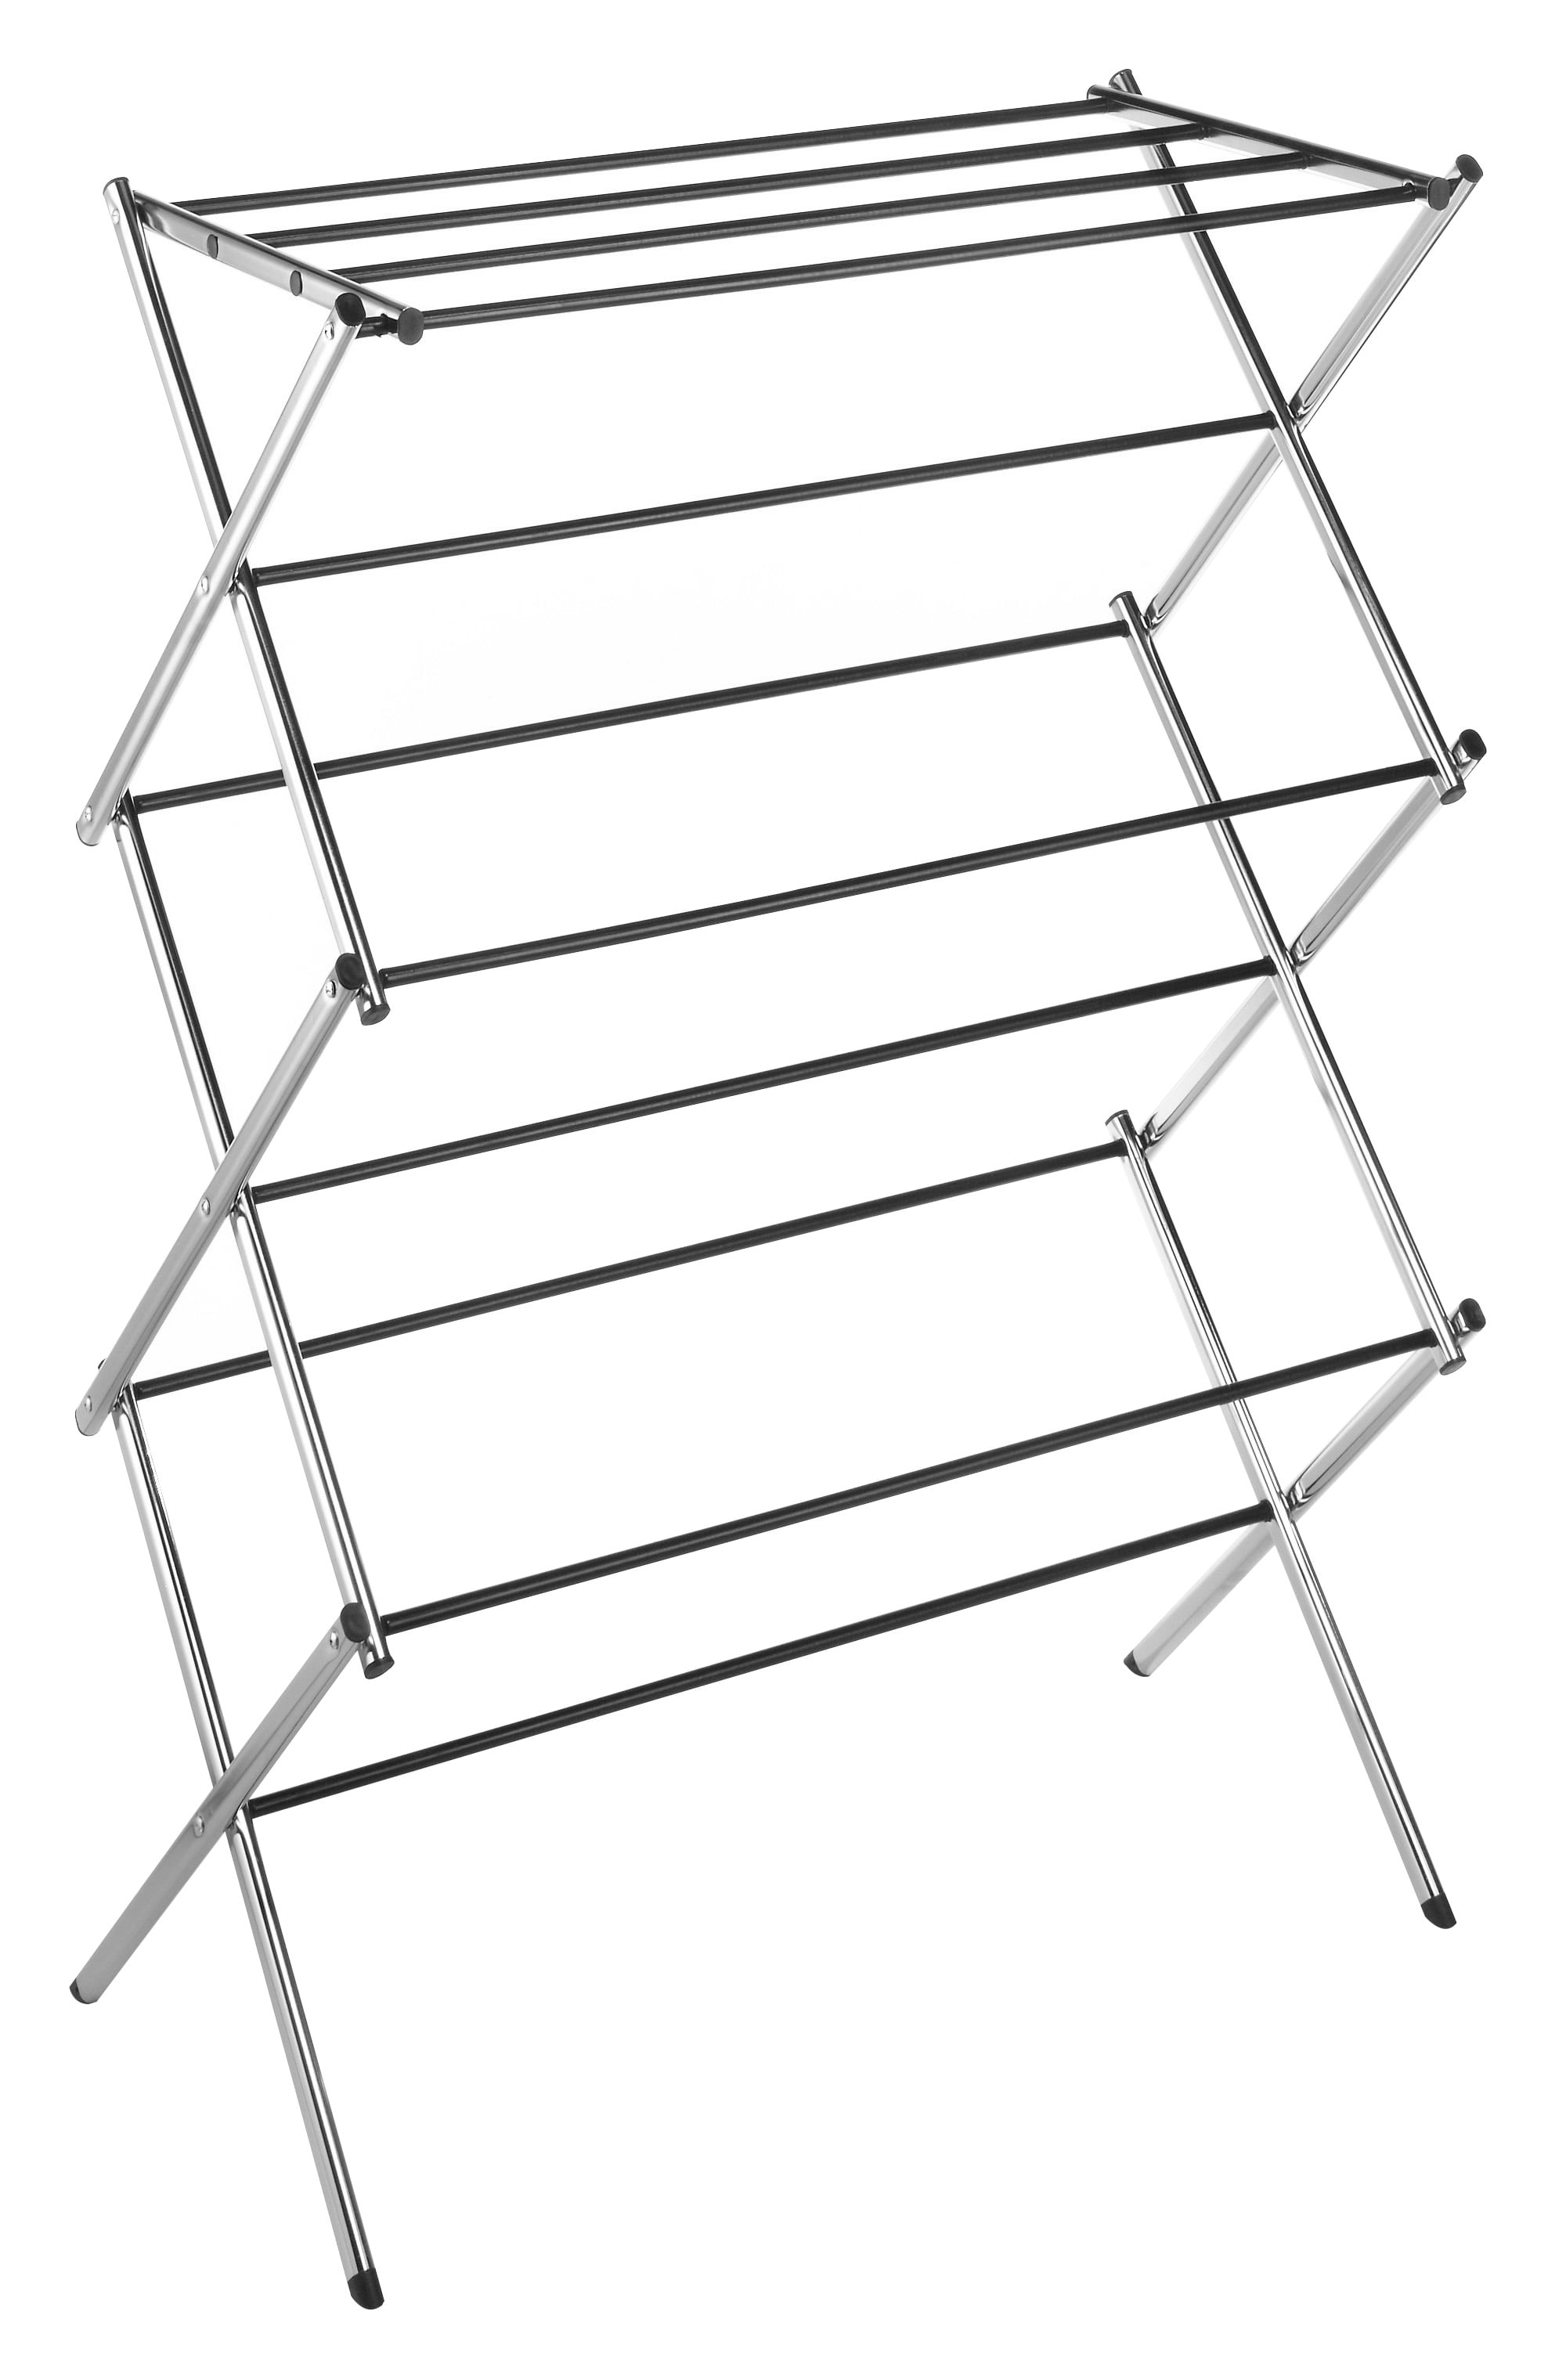 Whitmor 11-Bar Folding Metal Clothes Drying Rack with Top Shelf, Chrome -  Walmart.com